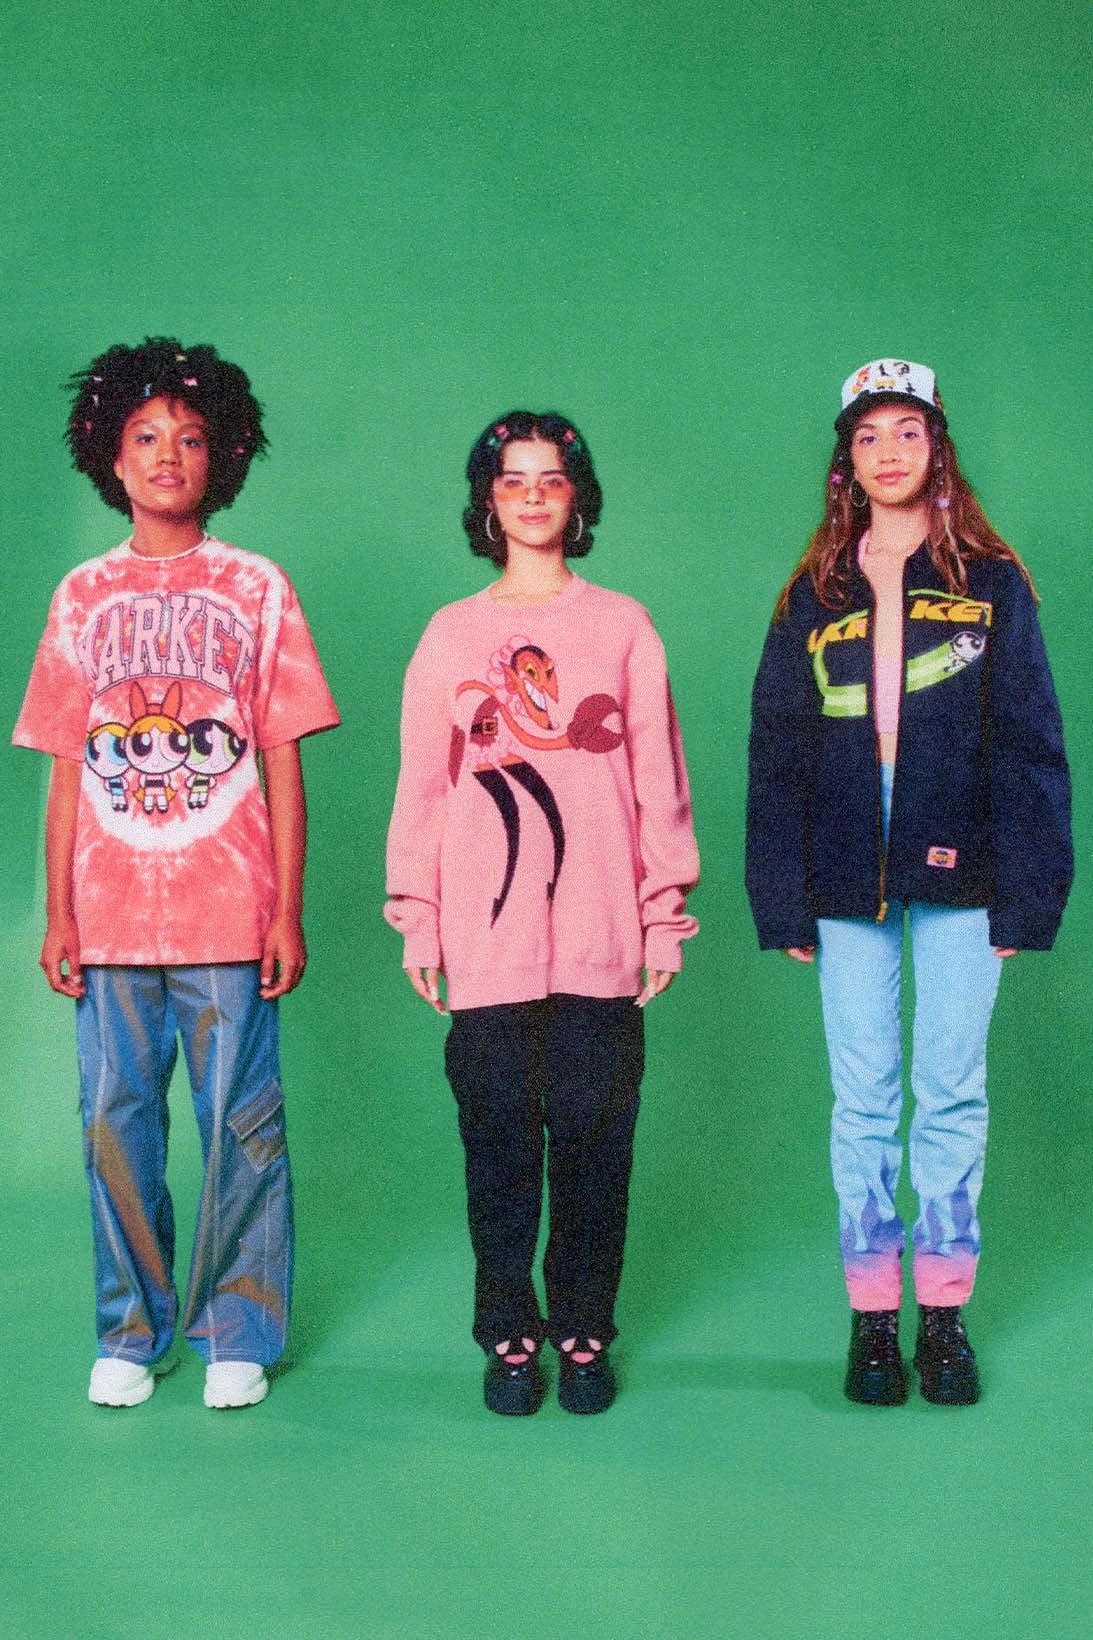 MARKET The Powerpuff Girls Collaboration T-shirt Jacket Release Info Bubbles Blossom Buttercup Him Mojo Jojo